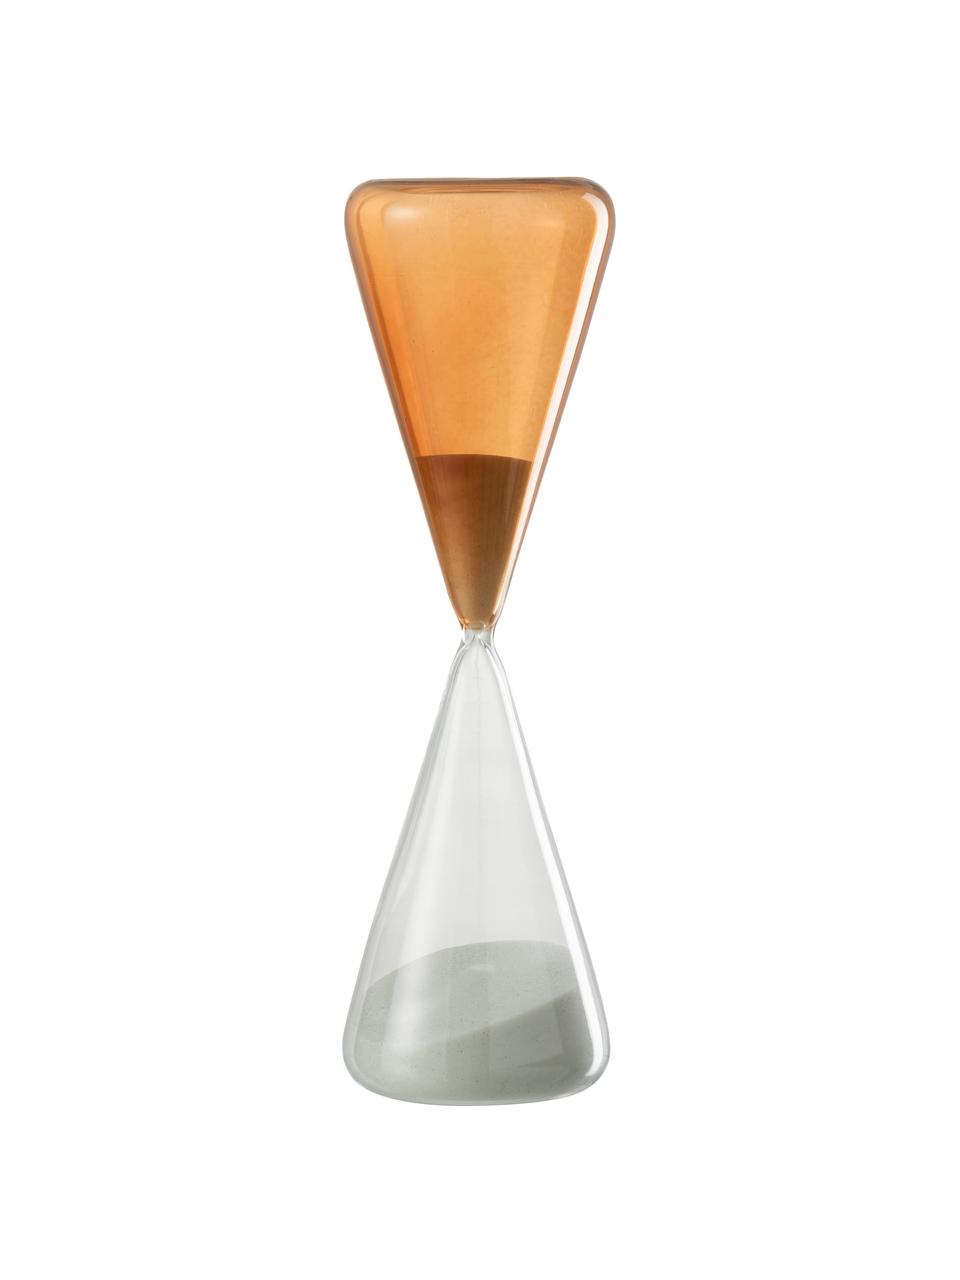 Deko-Objekt Time in Transparent/Orange, Glas, Orange, Transparent, Ø 9 x H 30 cm